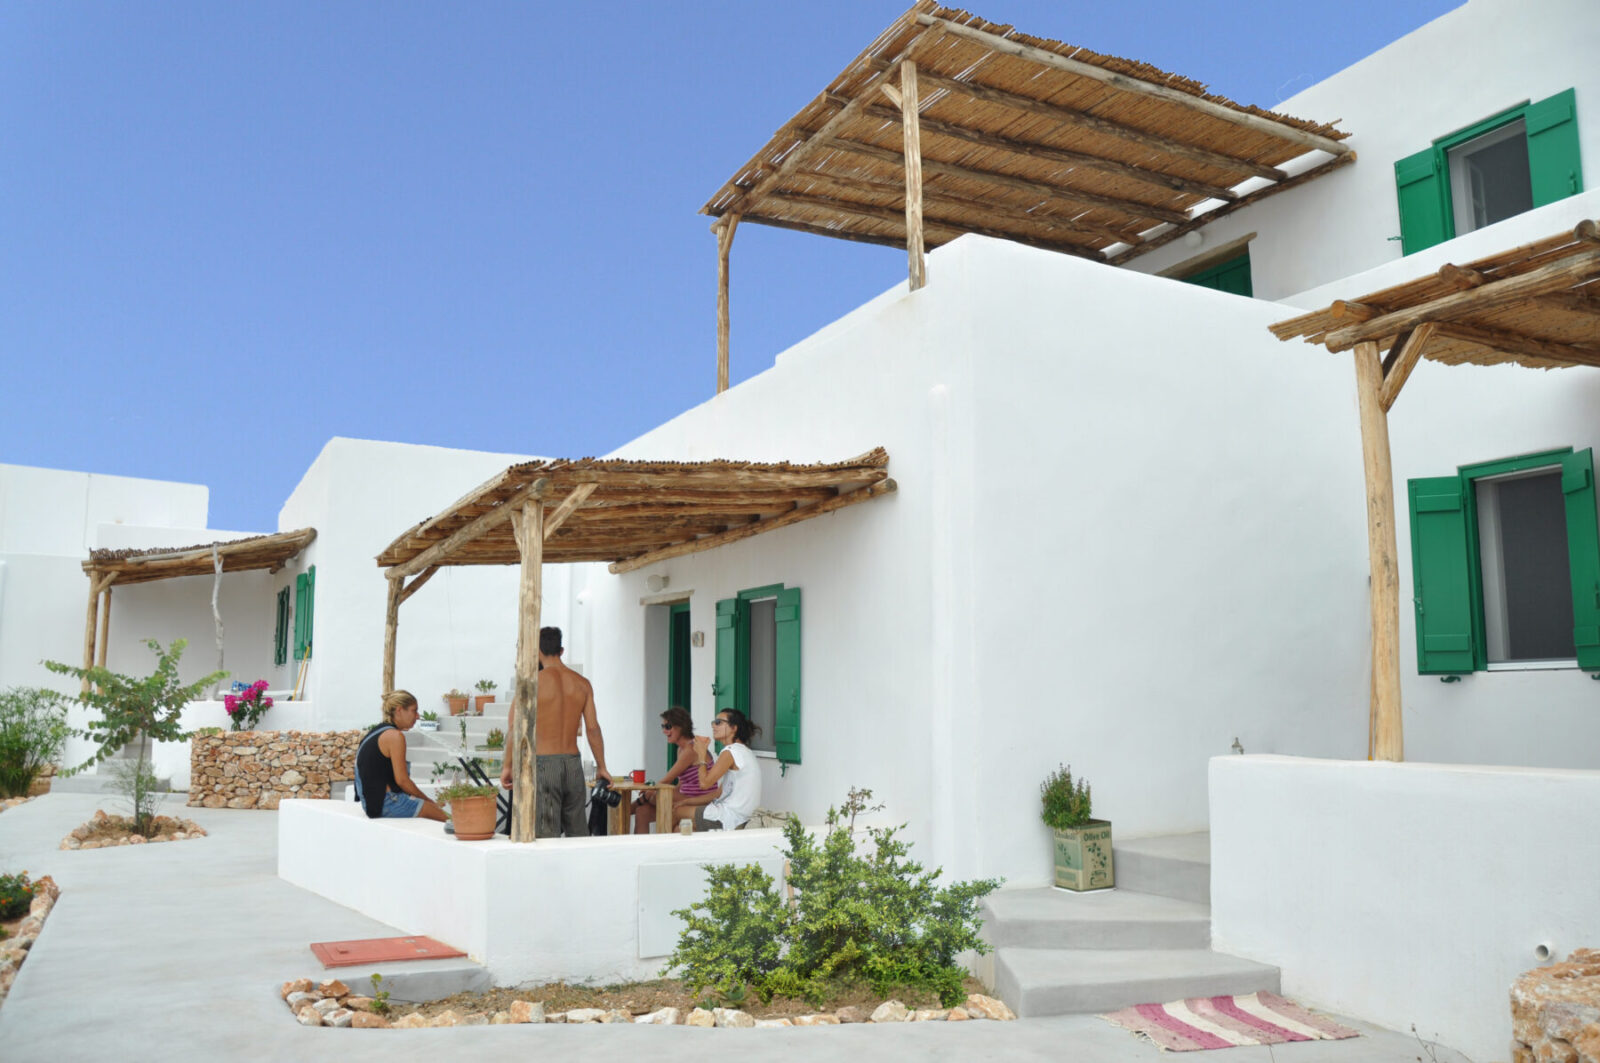 Archisearch ARGALIOS Guesthouse in Stavros, Donousa, Cyclades archipelago | Anka Arvanitidi - ECUALab